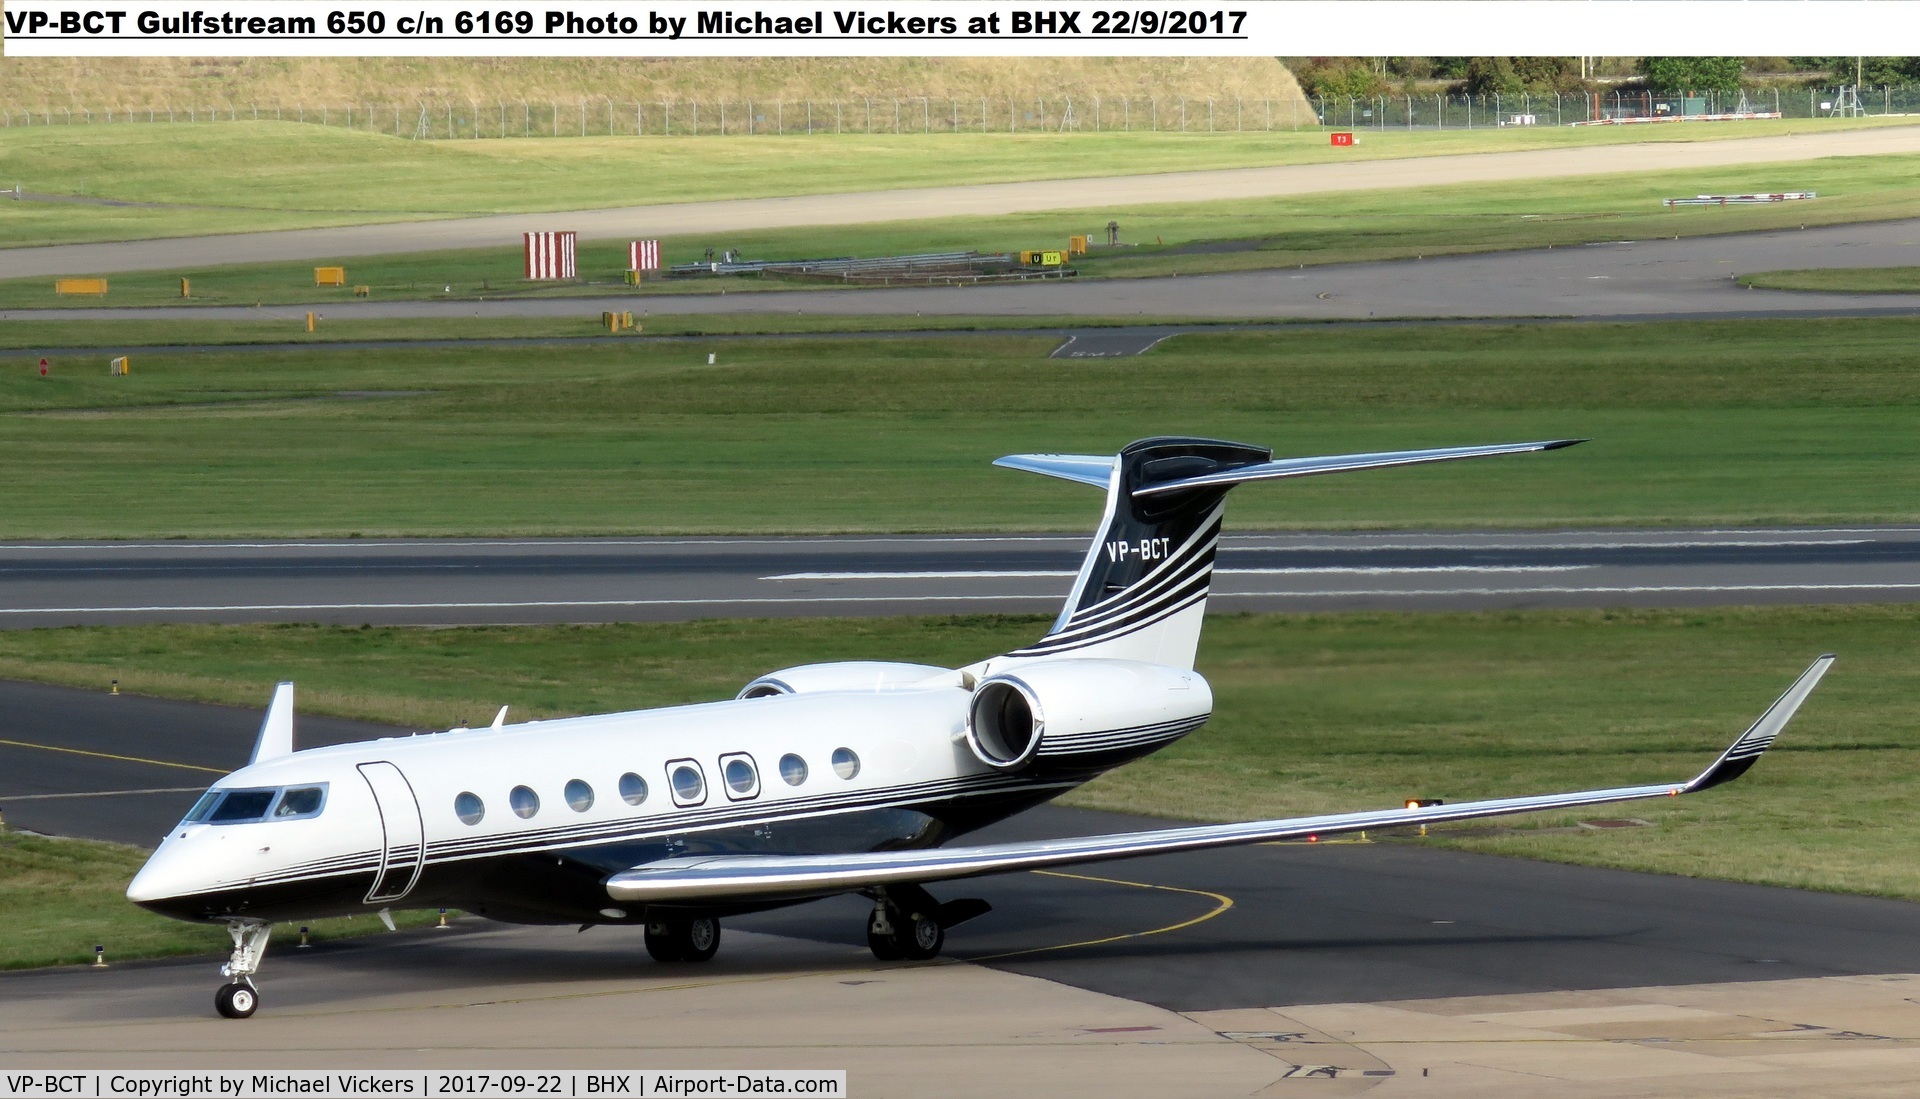 VP-BCT, 2016 Gulfstream Aerospace G650 (G-VI) C/N 6169, Taxying at BHX